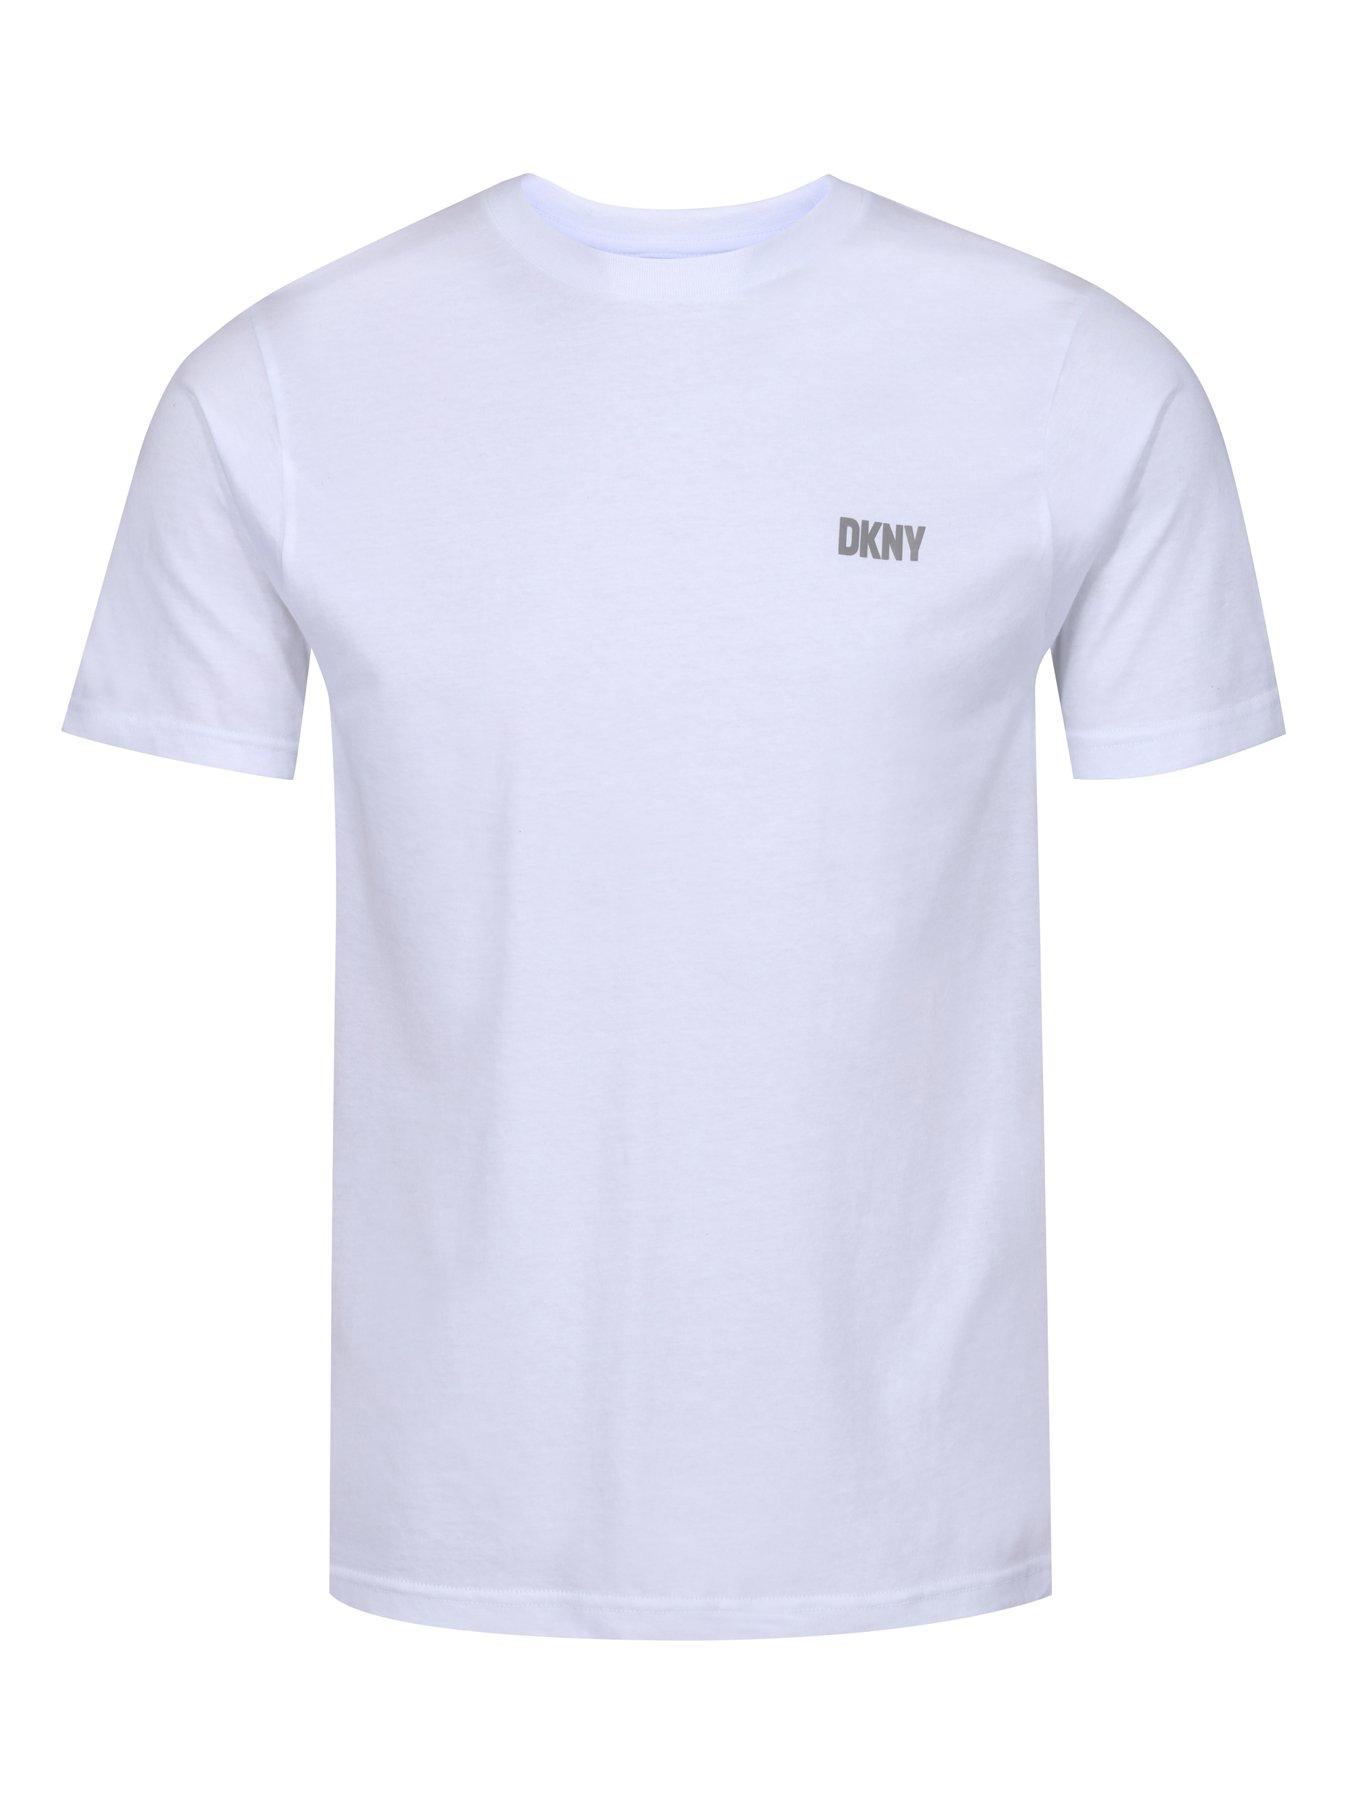 DKNY Giants Multi Pack - 3 T-shirt